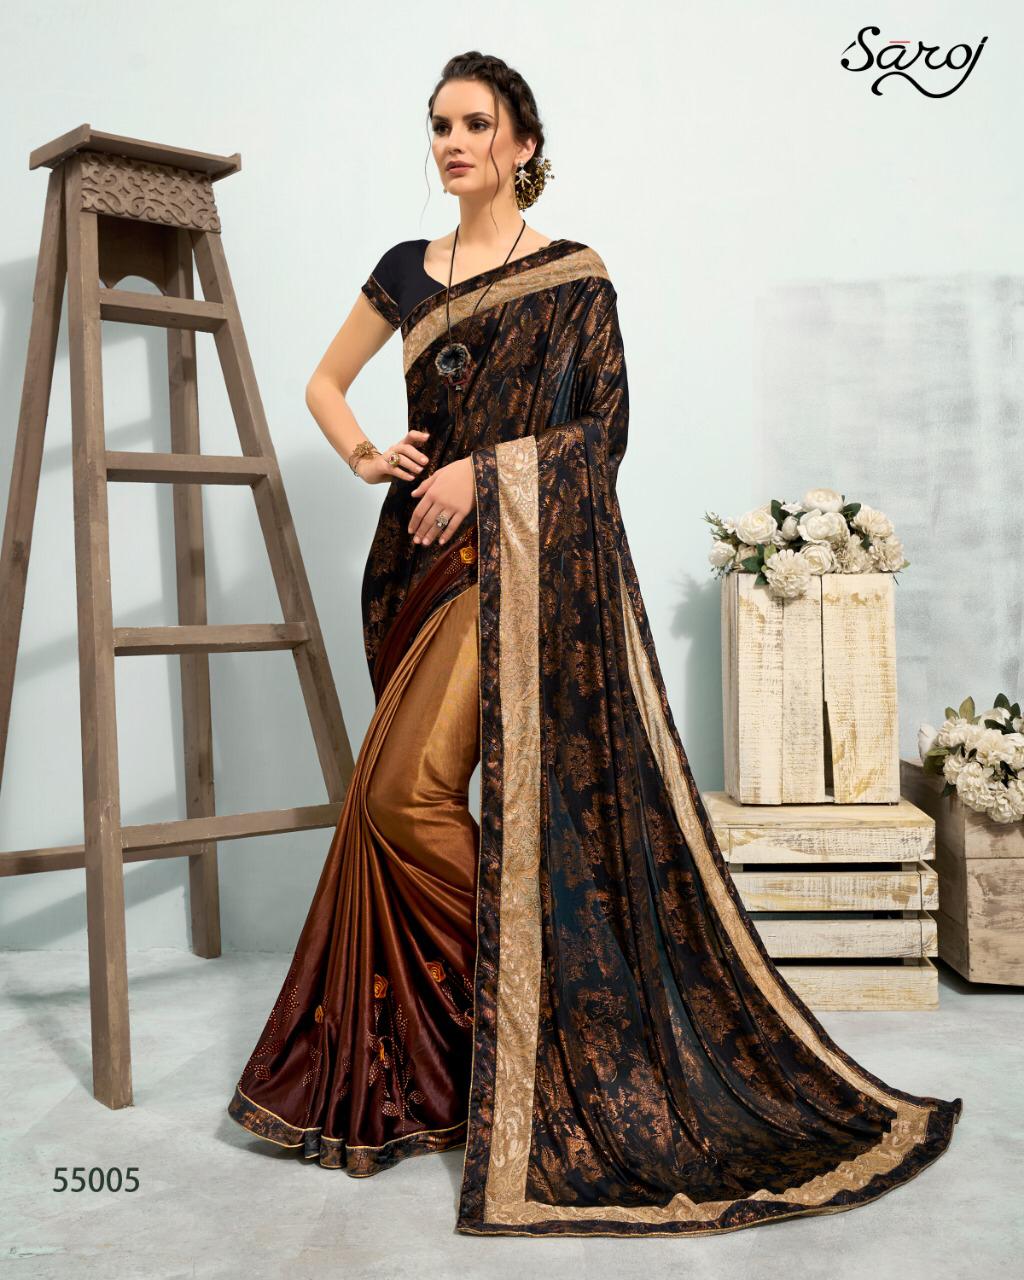 Saroj Aliya beautifully designed sarees in wholesale prices